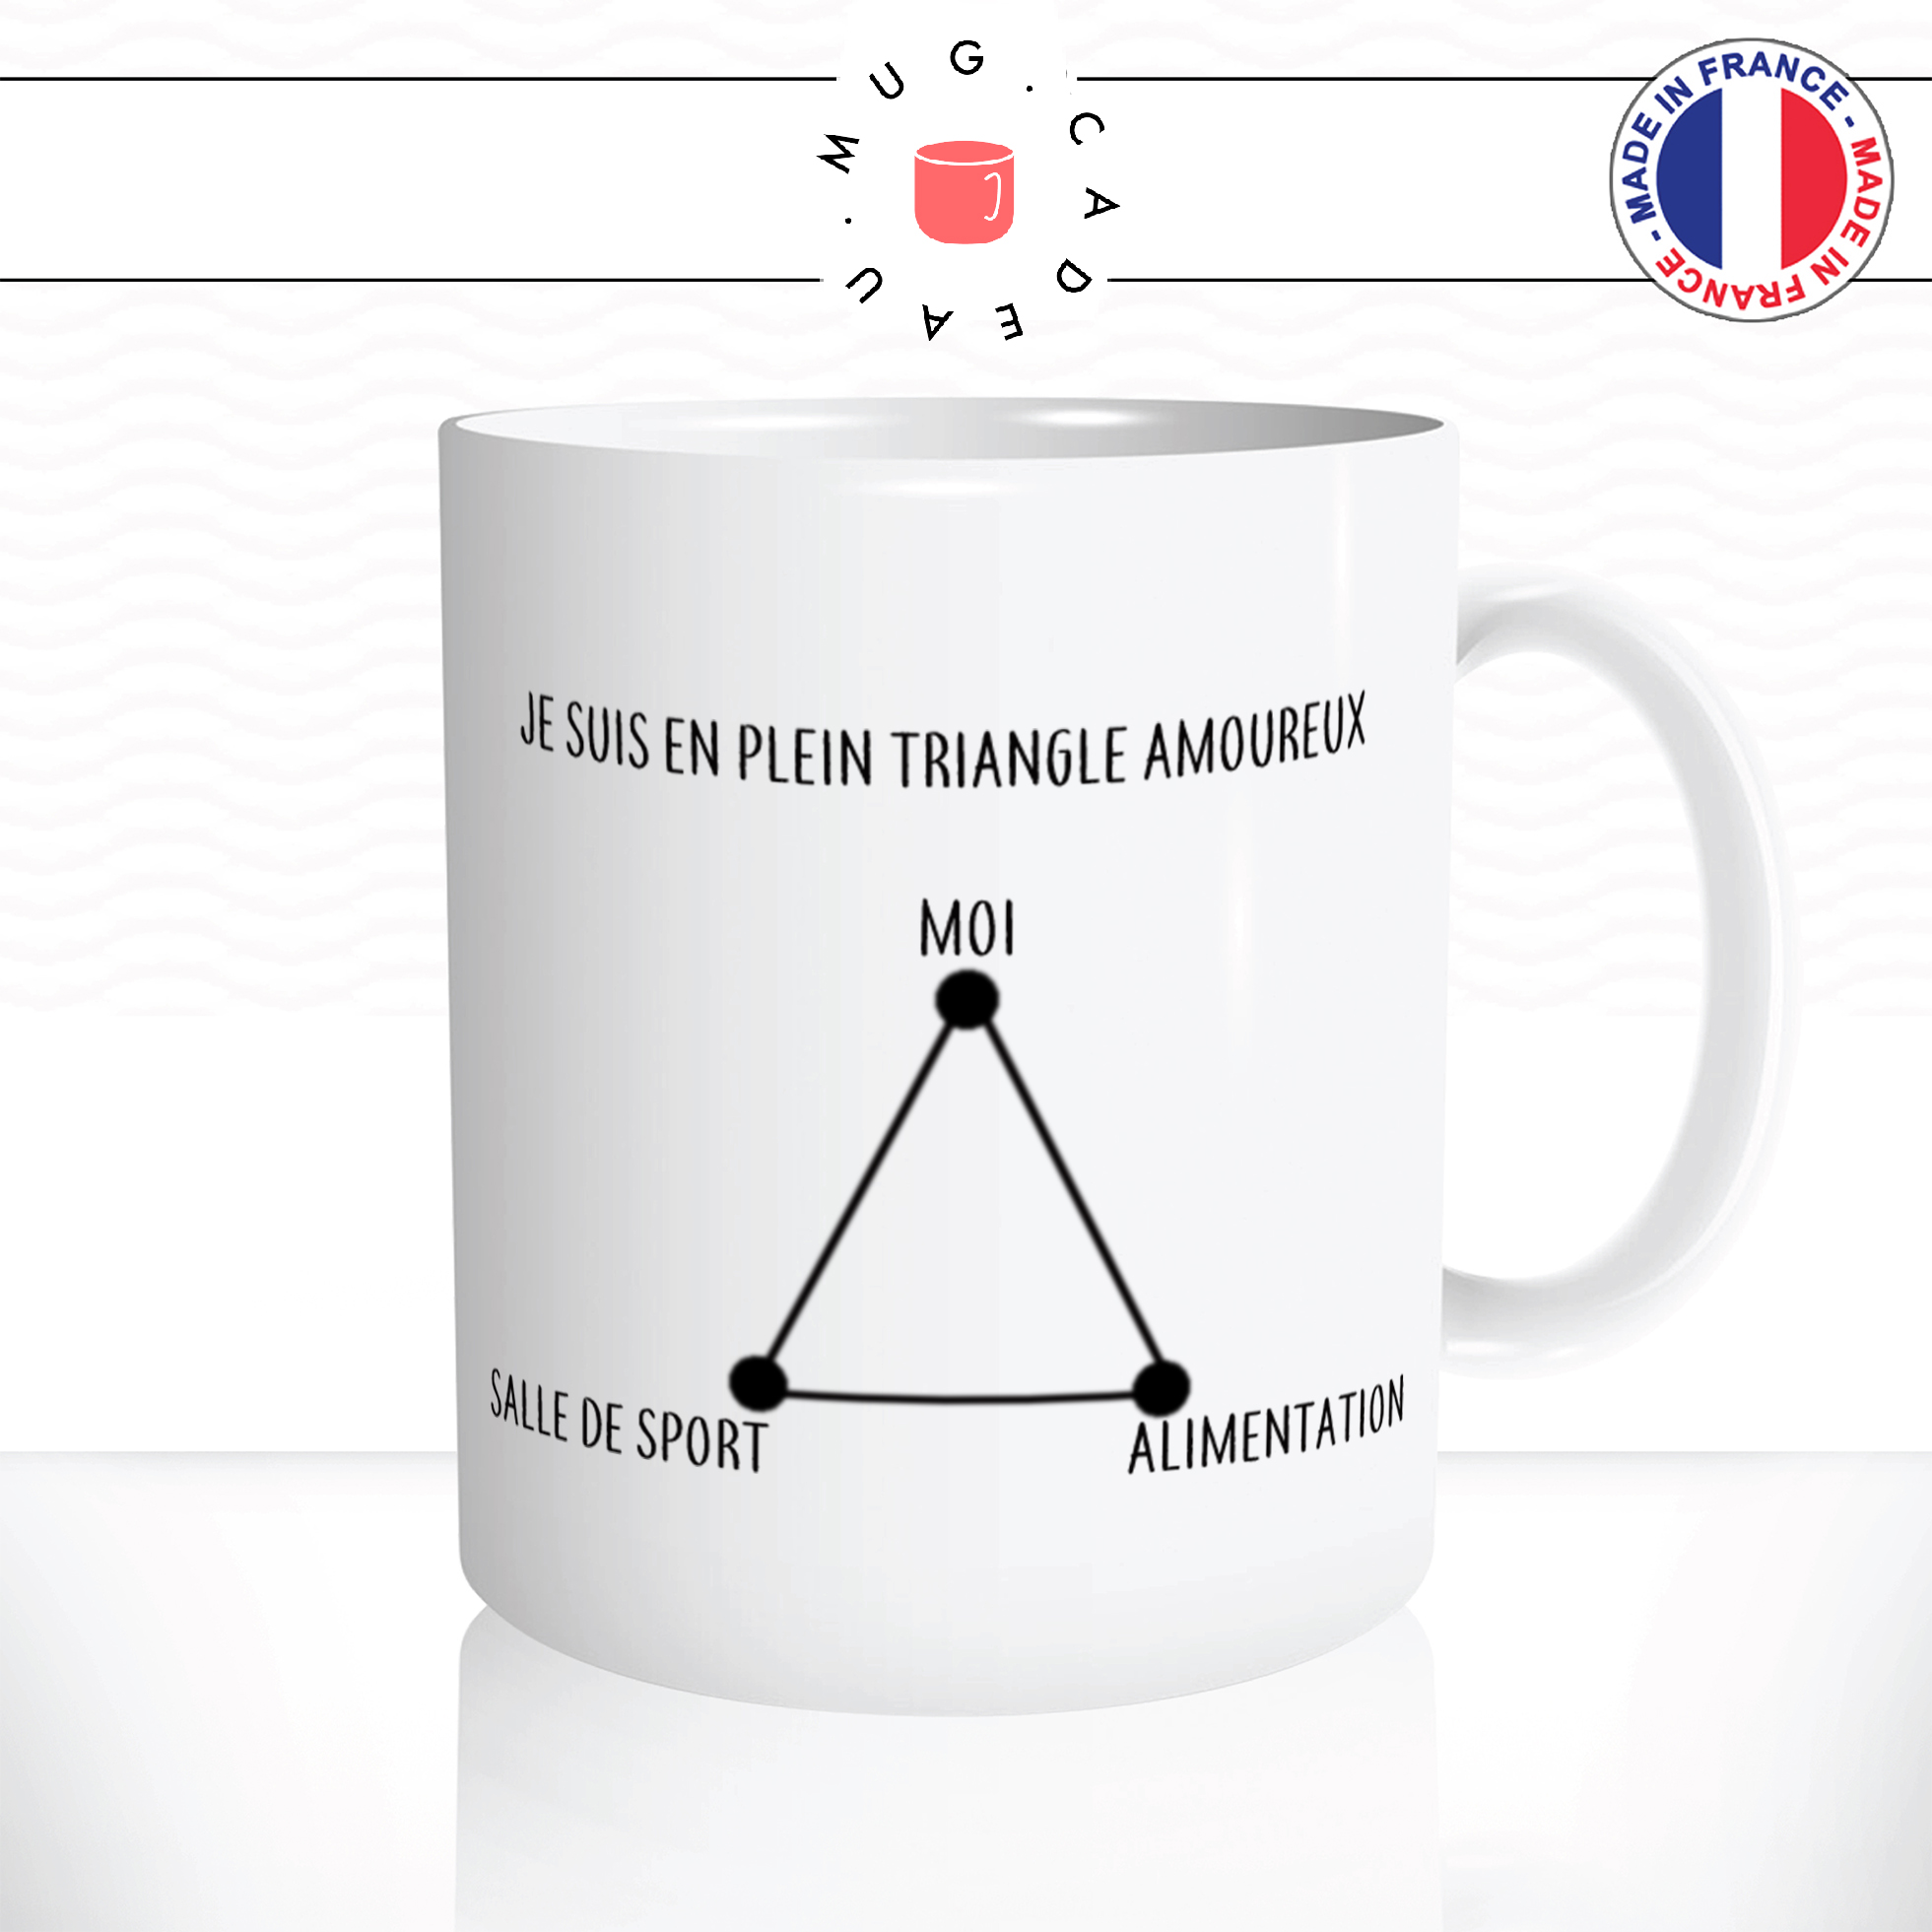 mug-tasse-ref69-citation-motivation-triangle-amoureux-sport-alimentation-cafe-the-mugs-tasses-personnalise-anse-droite